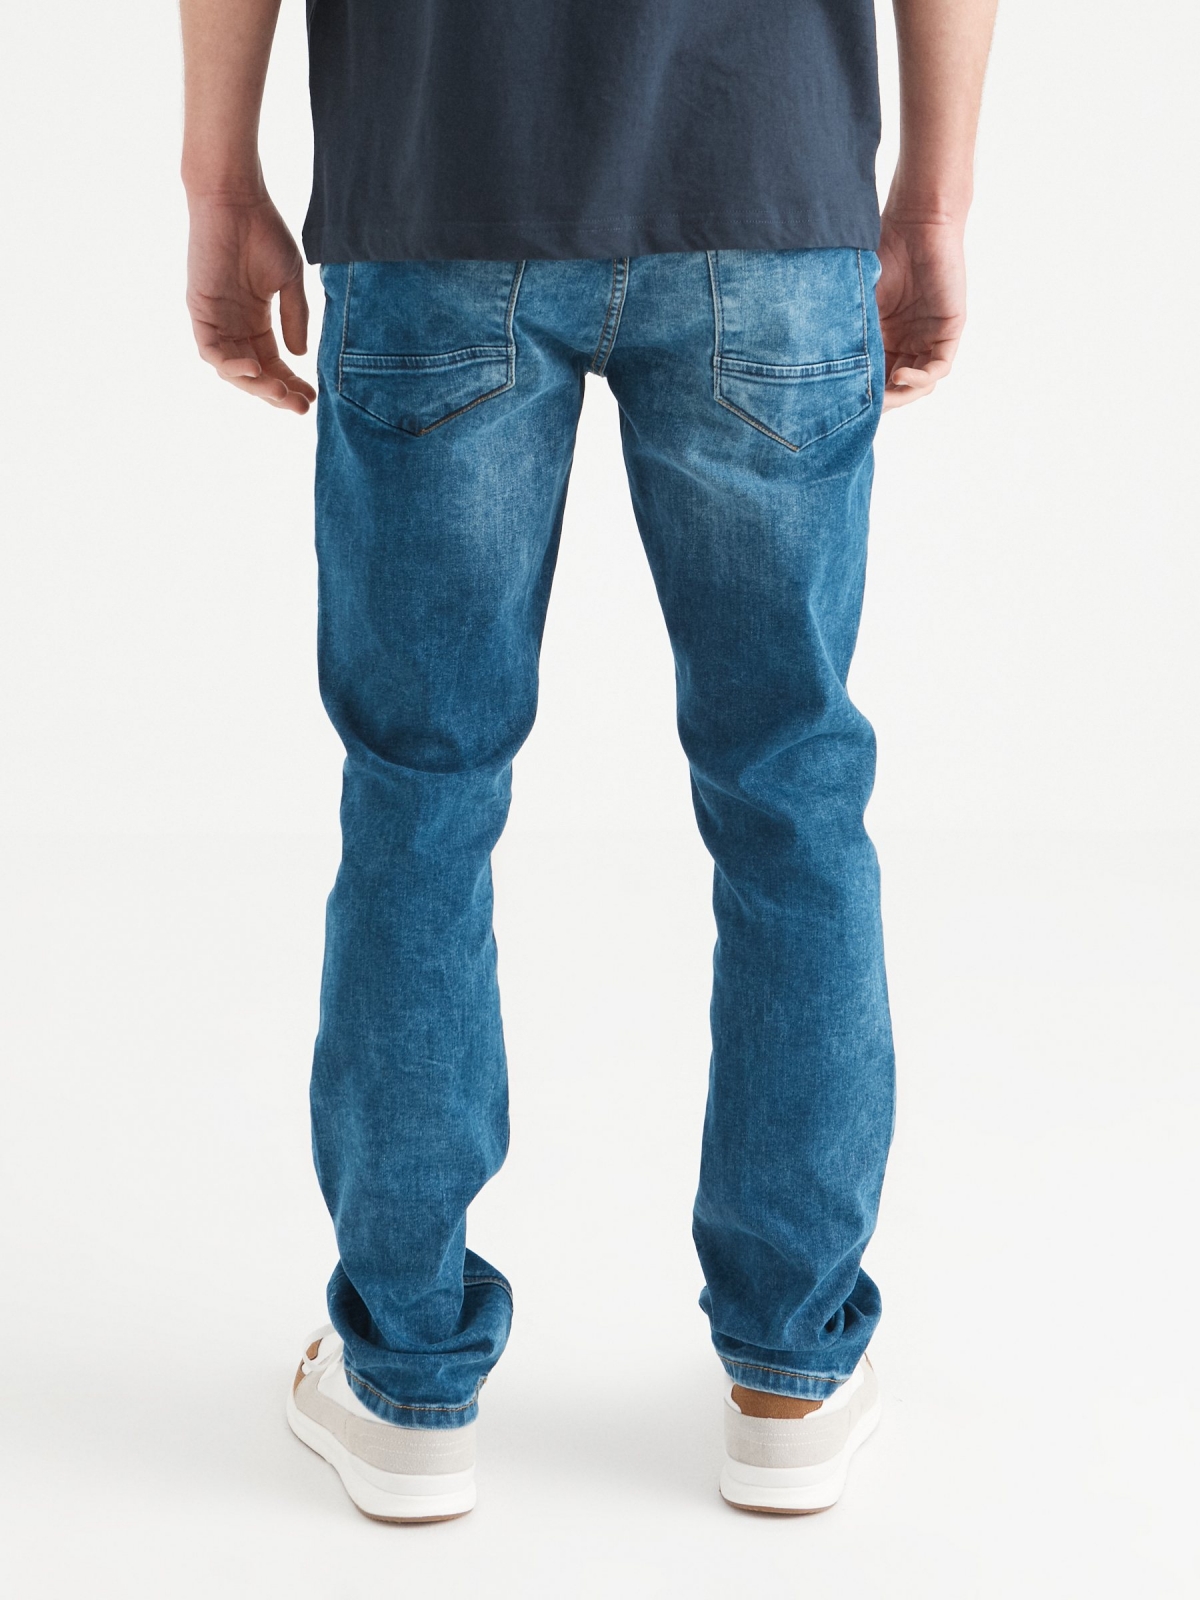 Jeans regular lavado medio oscuro